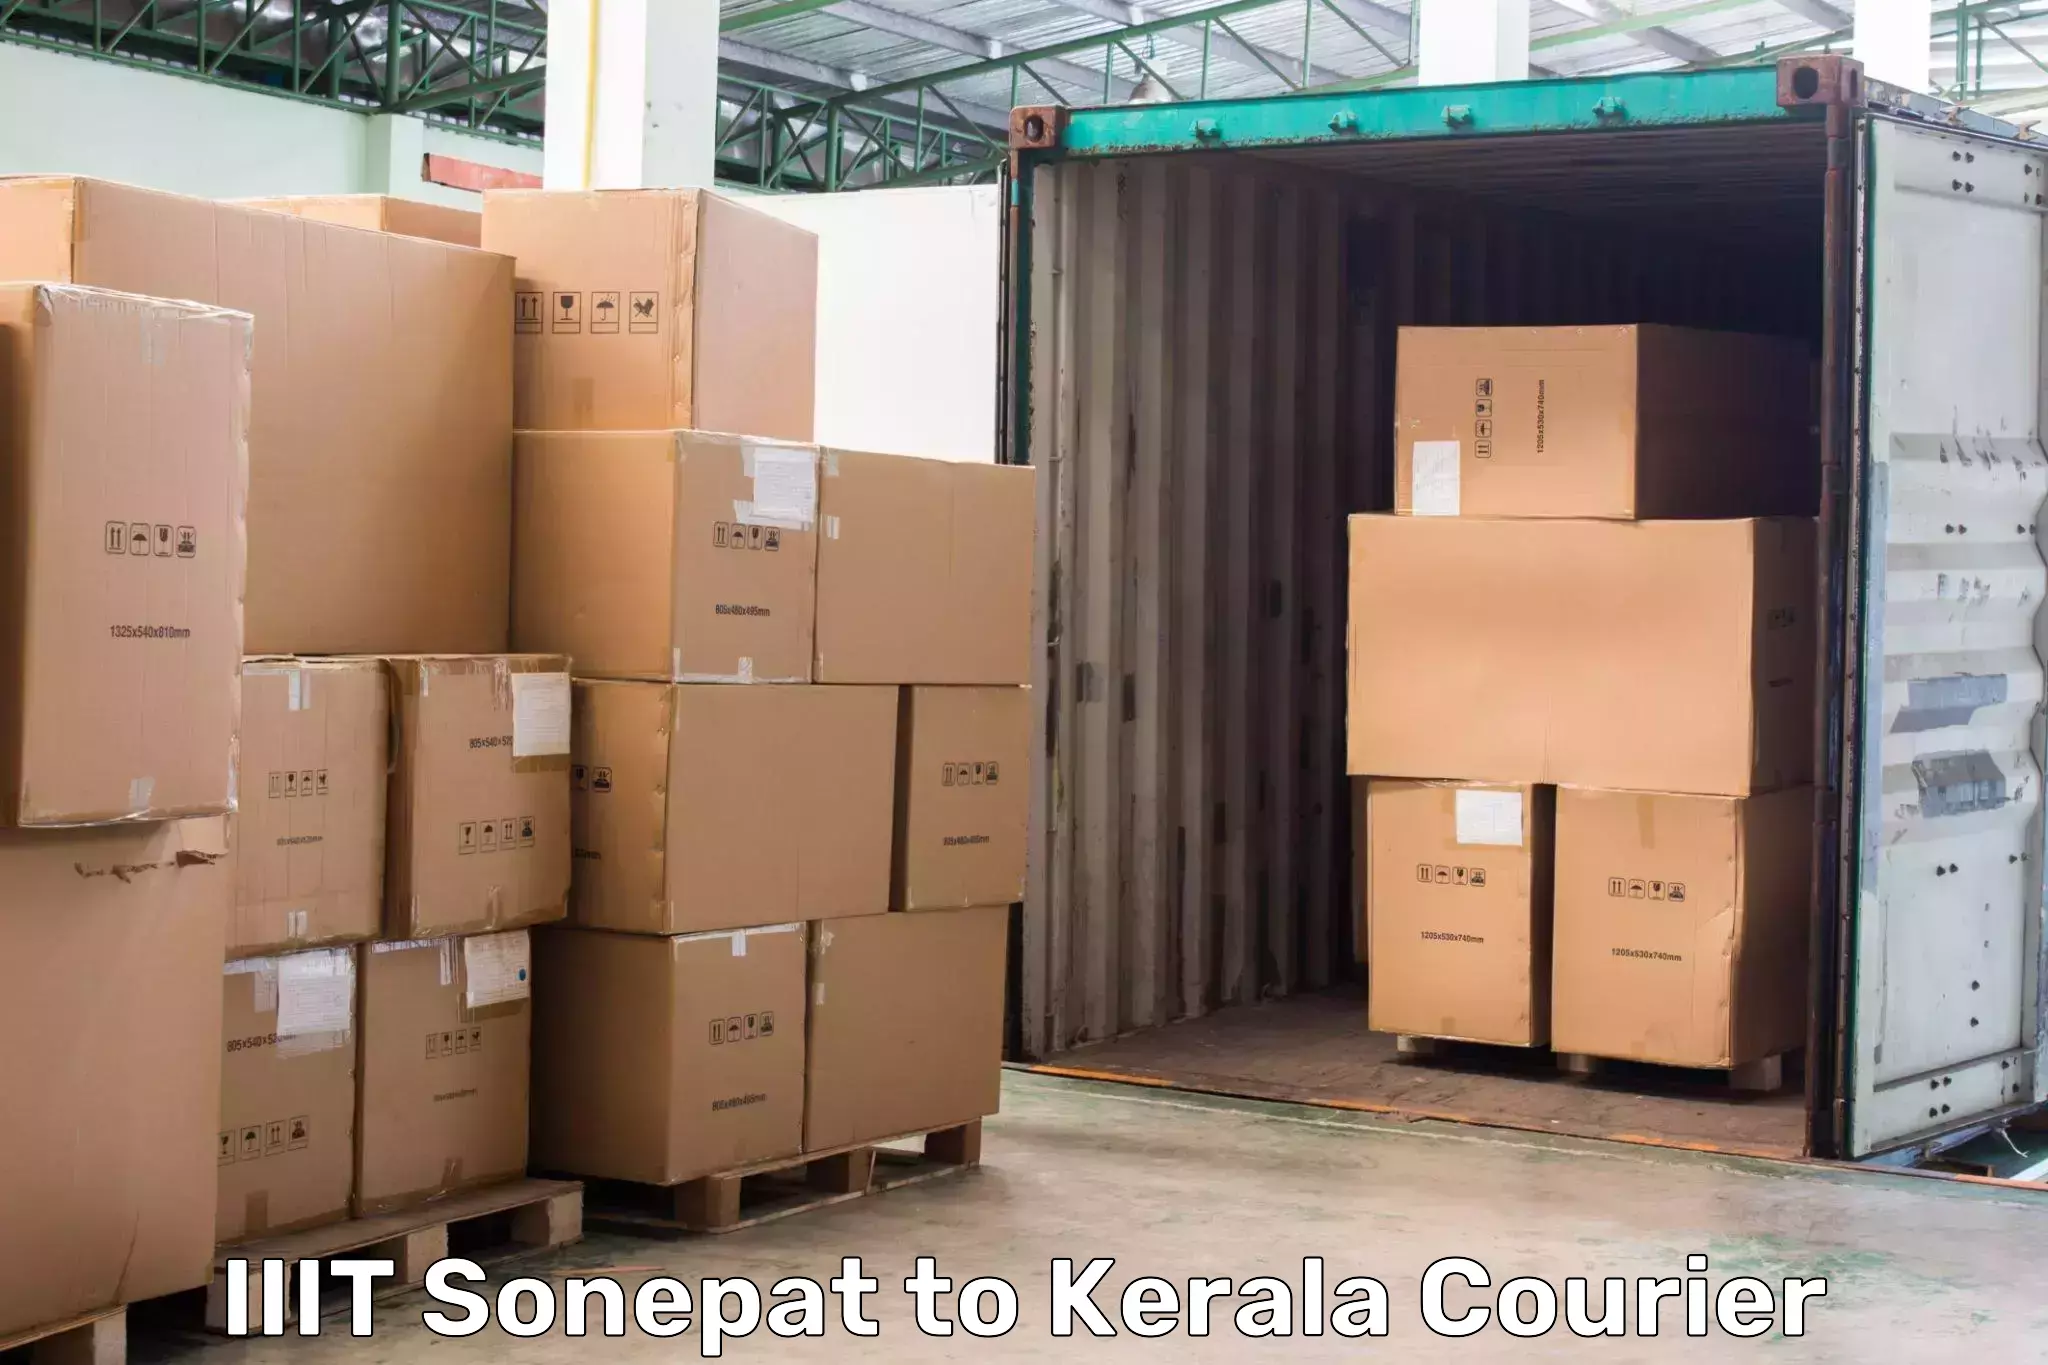 State-of-the-art courier technology IIIT Sonepat to Kattappana